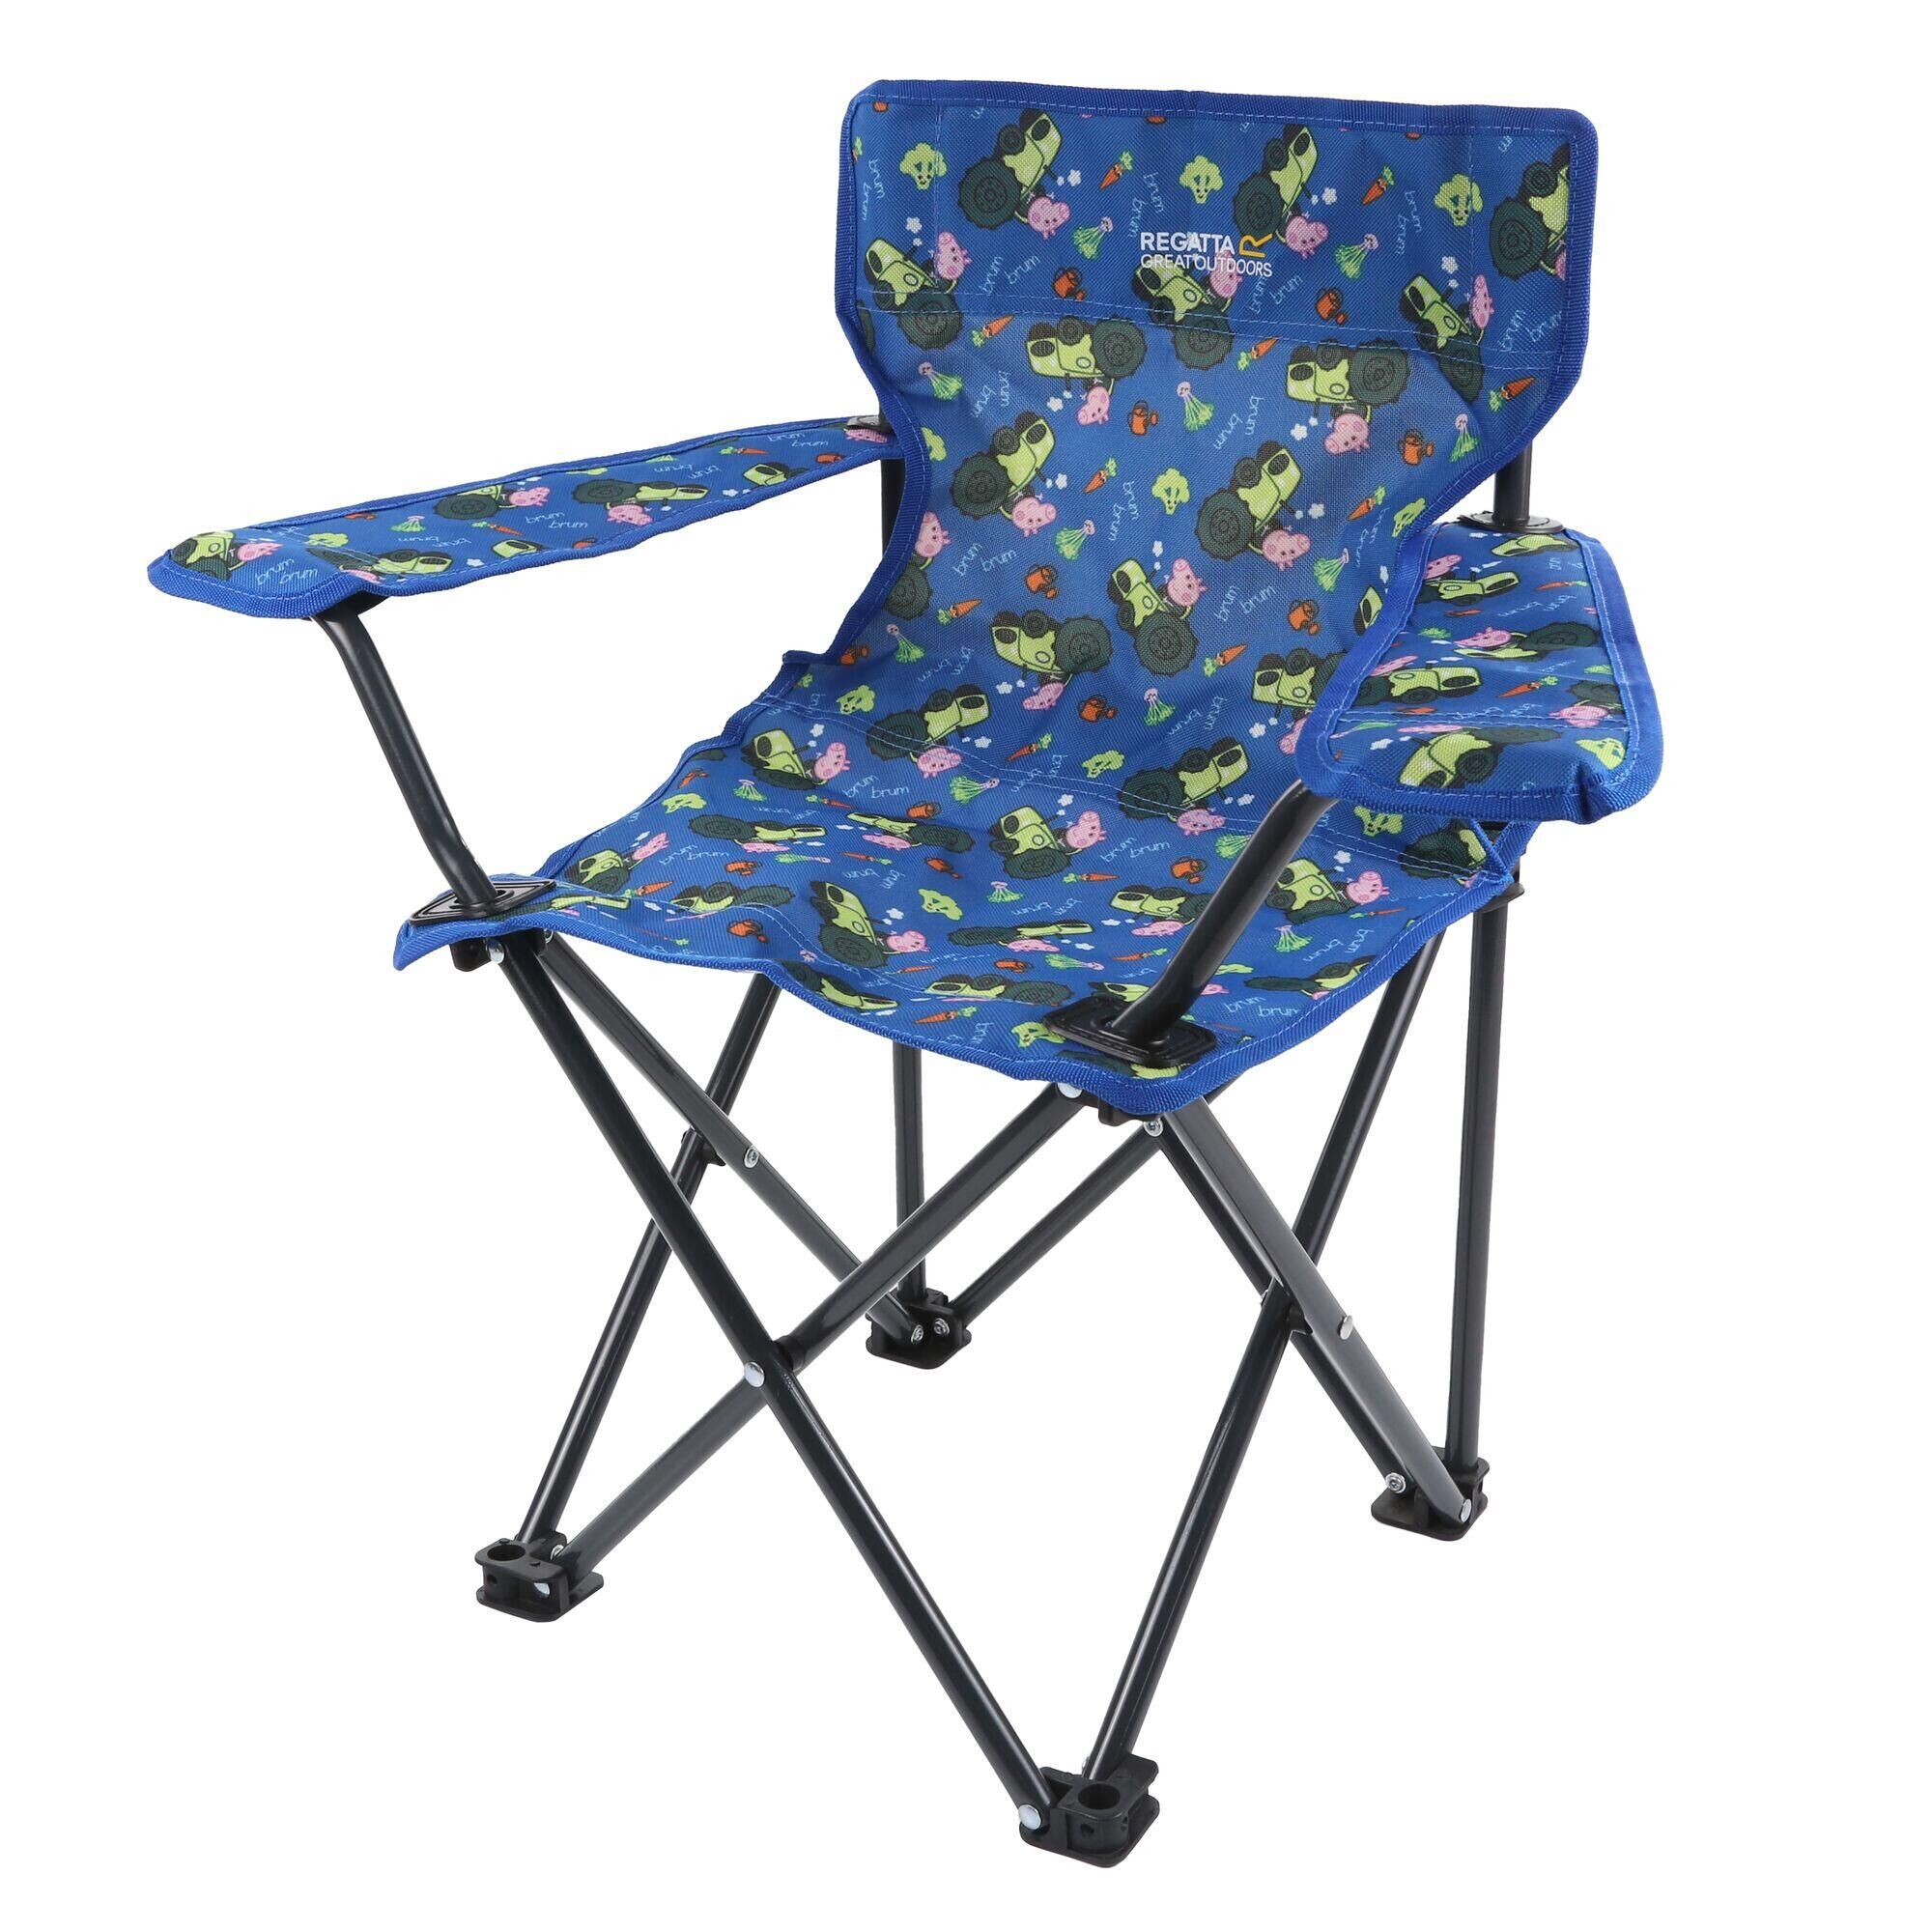 REGATTA Peppa Pig Kids' Camping Chair - Blue Tractor